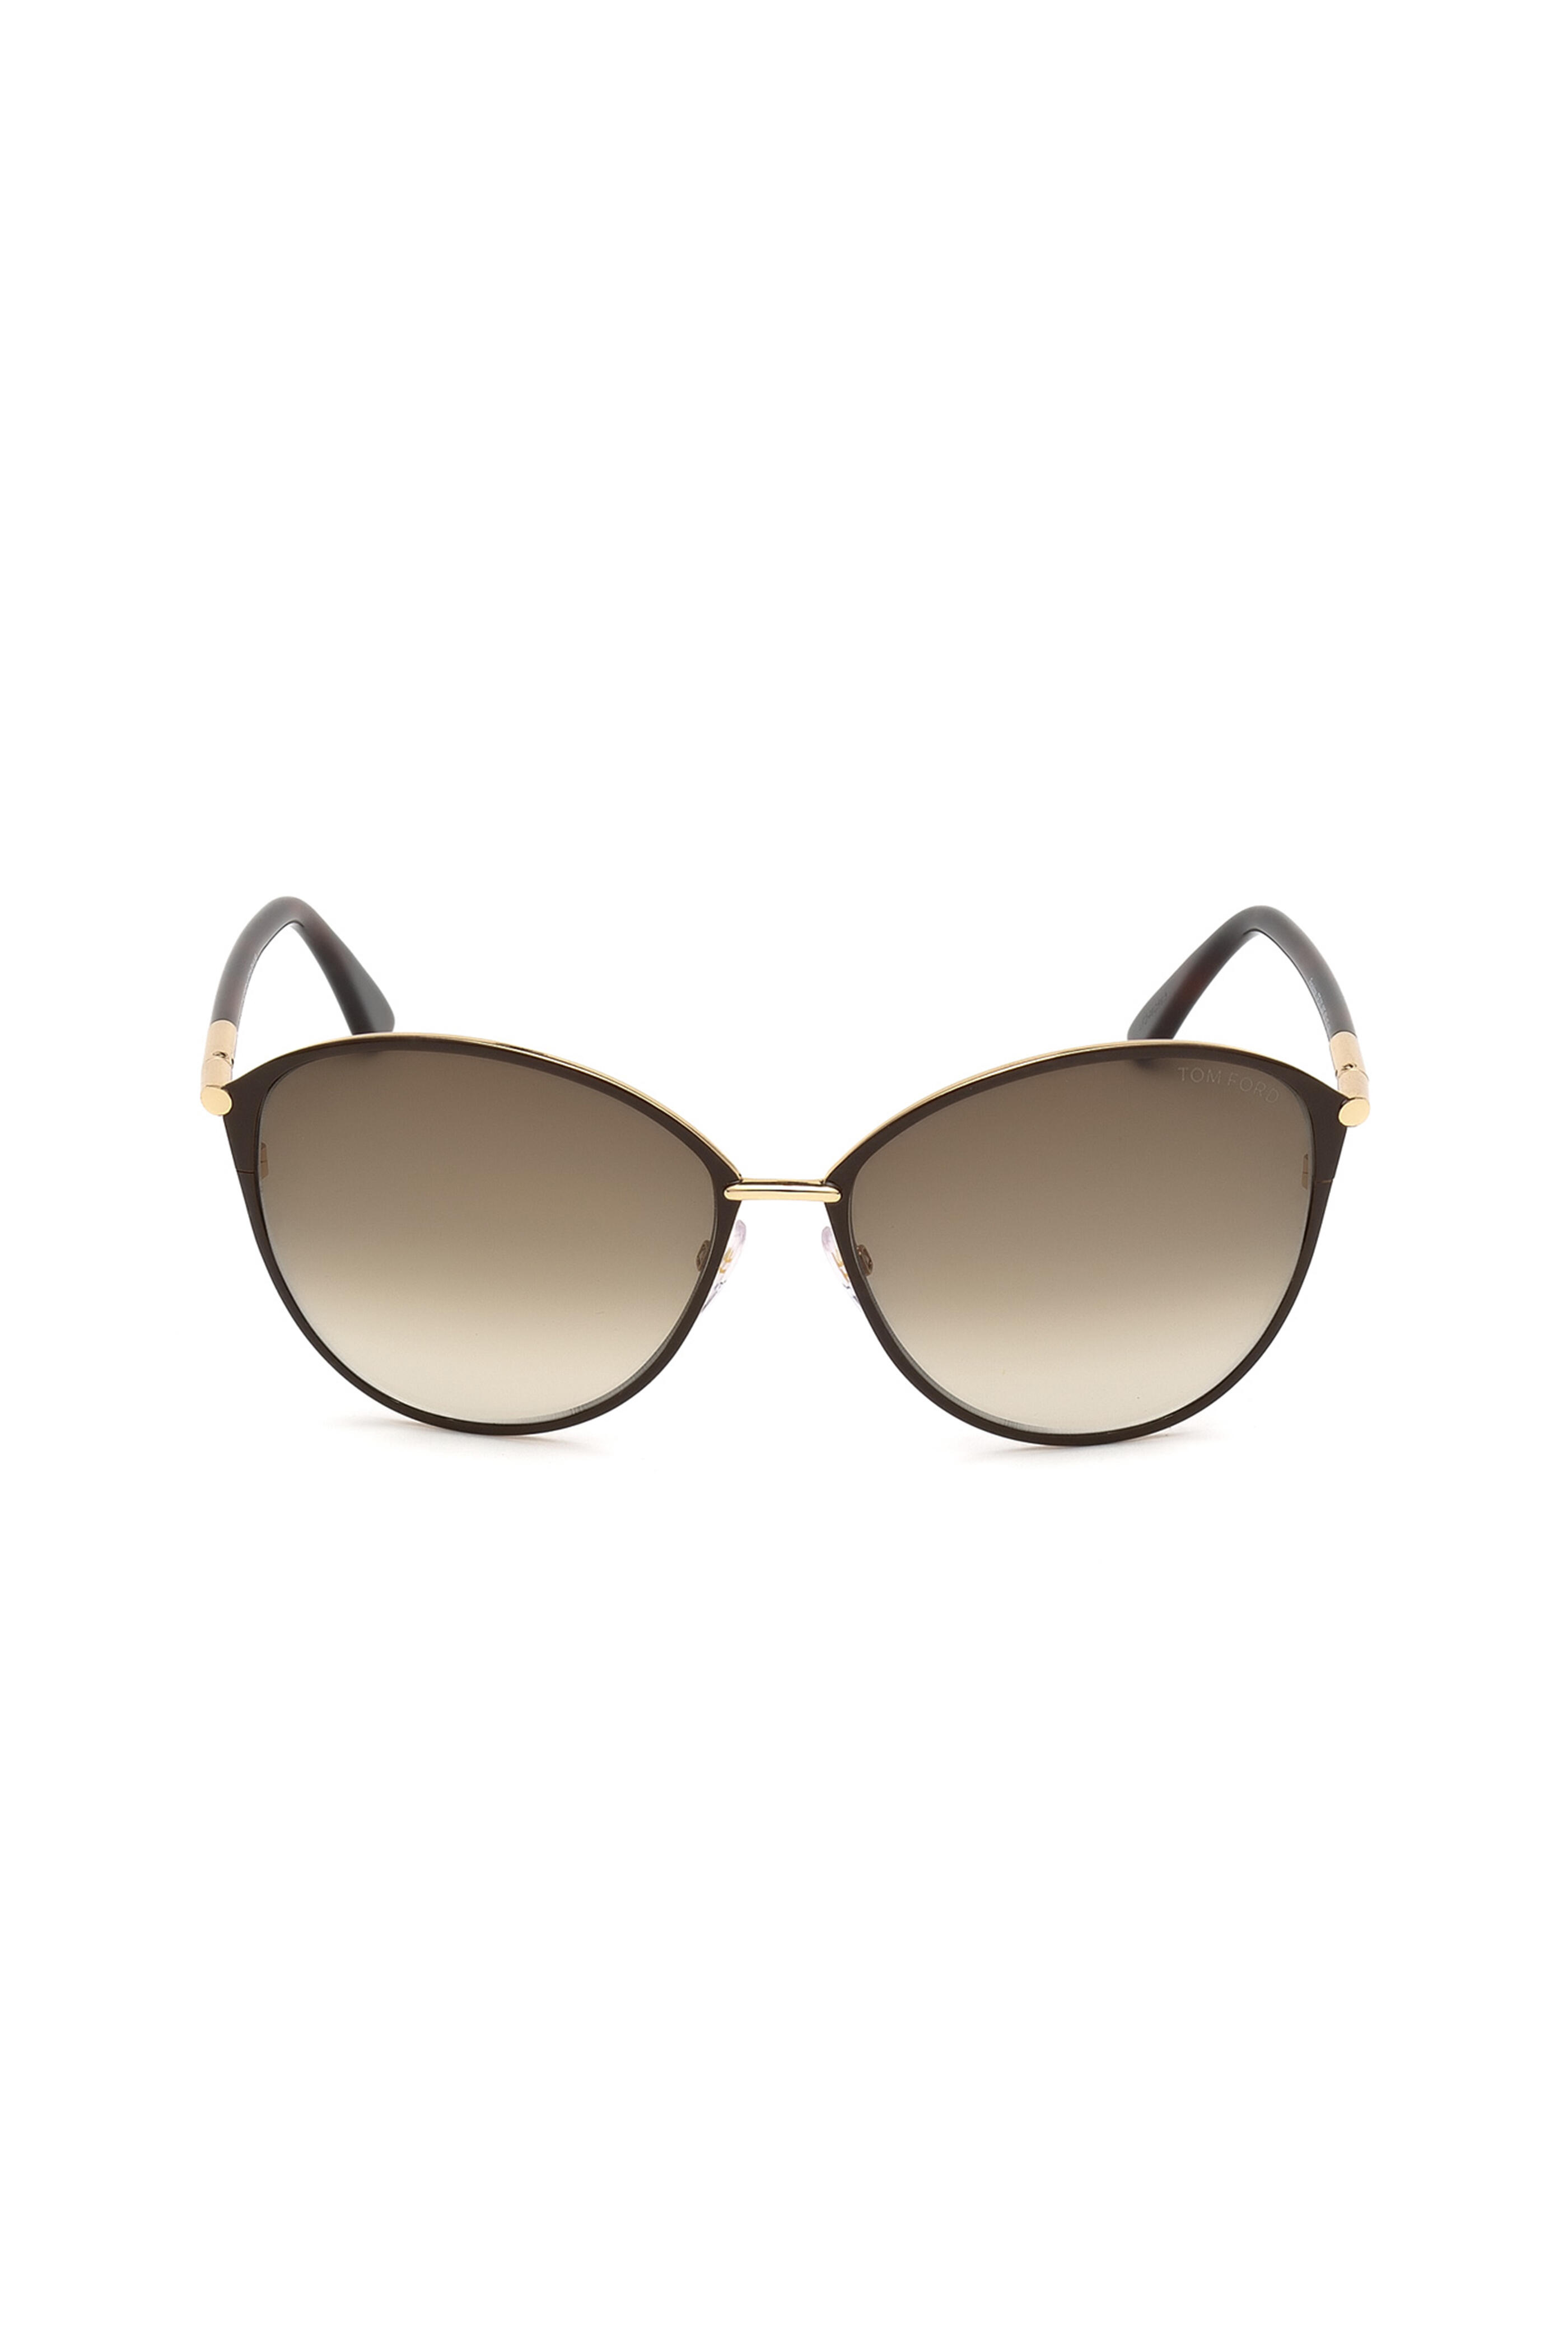 Tom Ford Eyewear - Shiny Rose Gold Brown Sunglasses